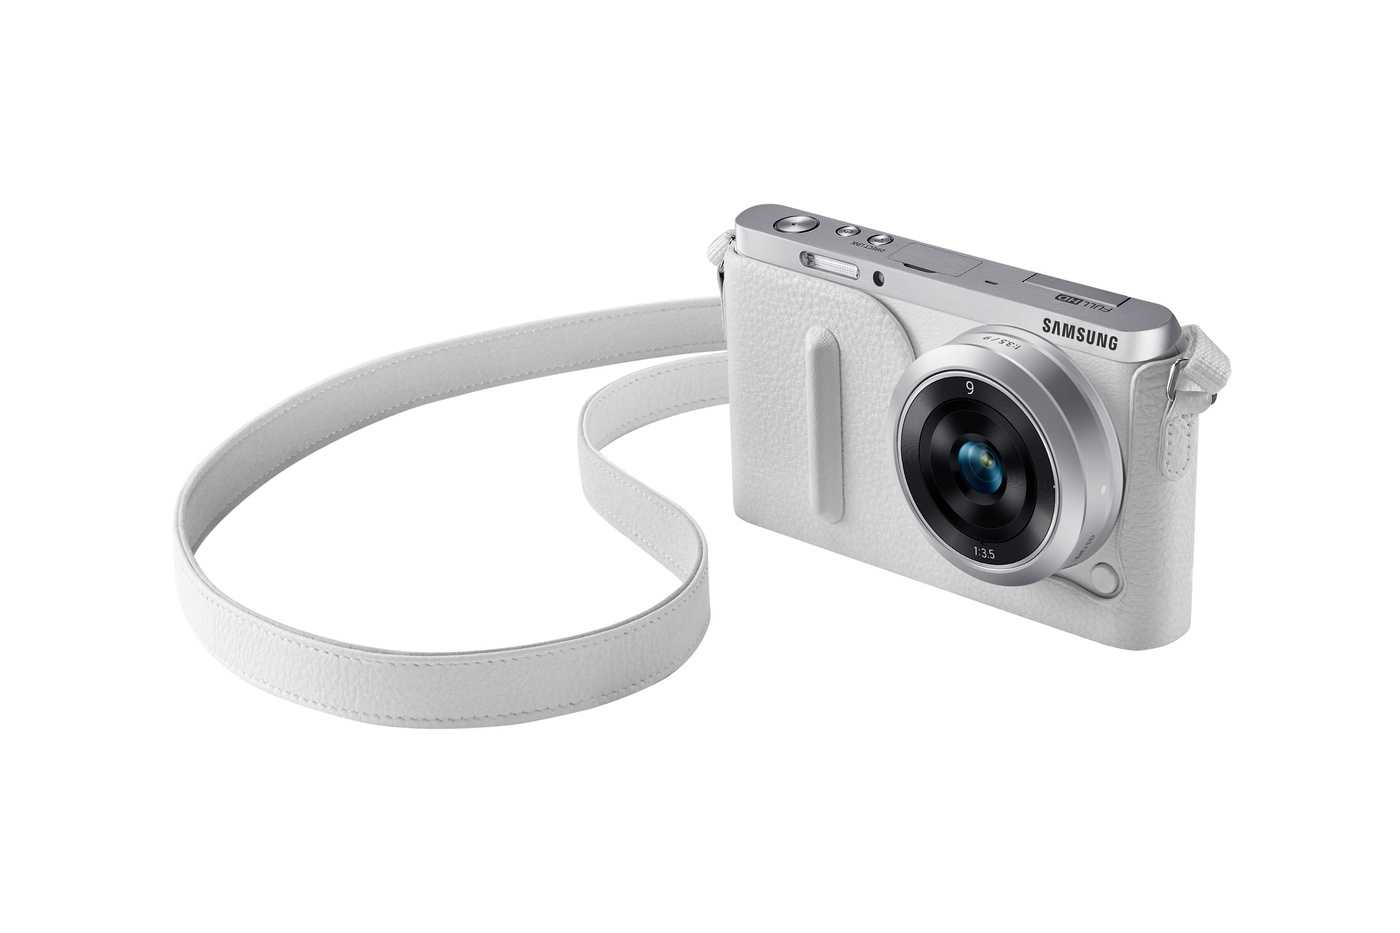 Фотоаппарат самсунг nx300m kit в спб: купить недорого, распродажа, акции, 2021